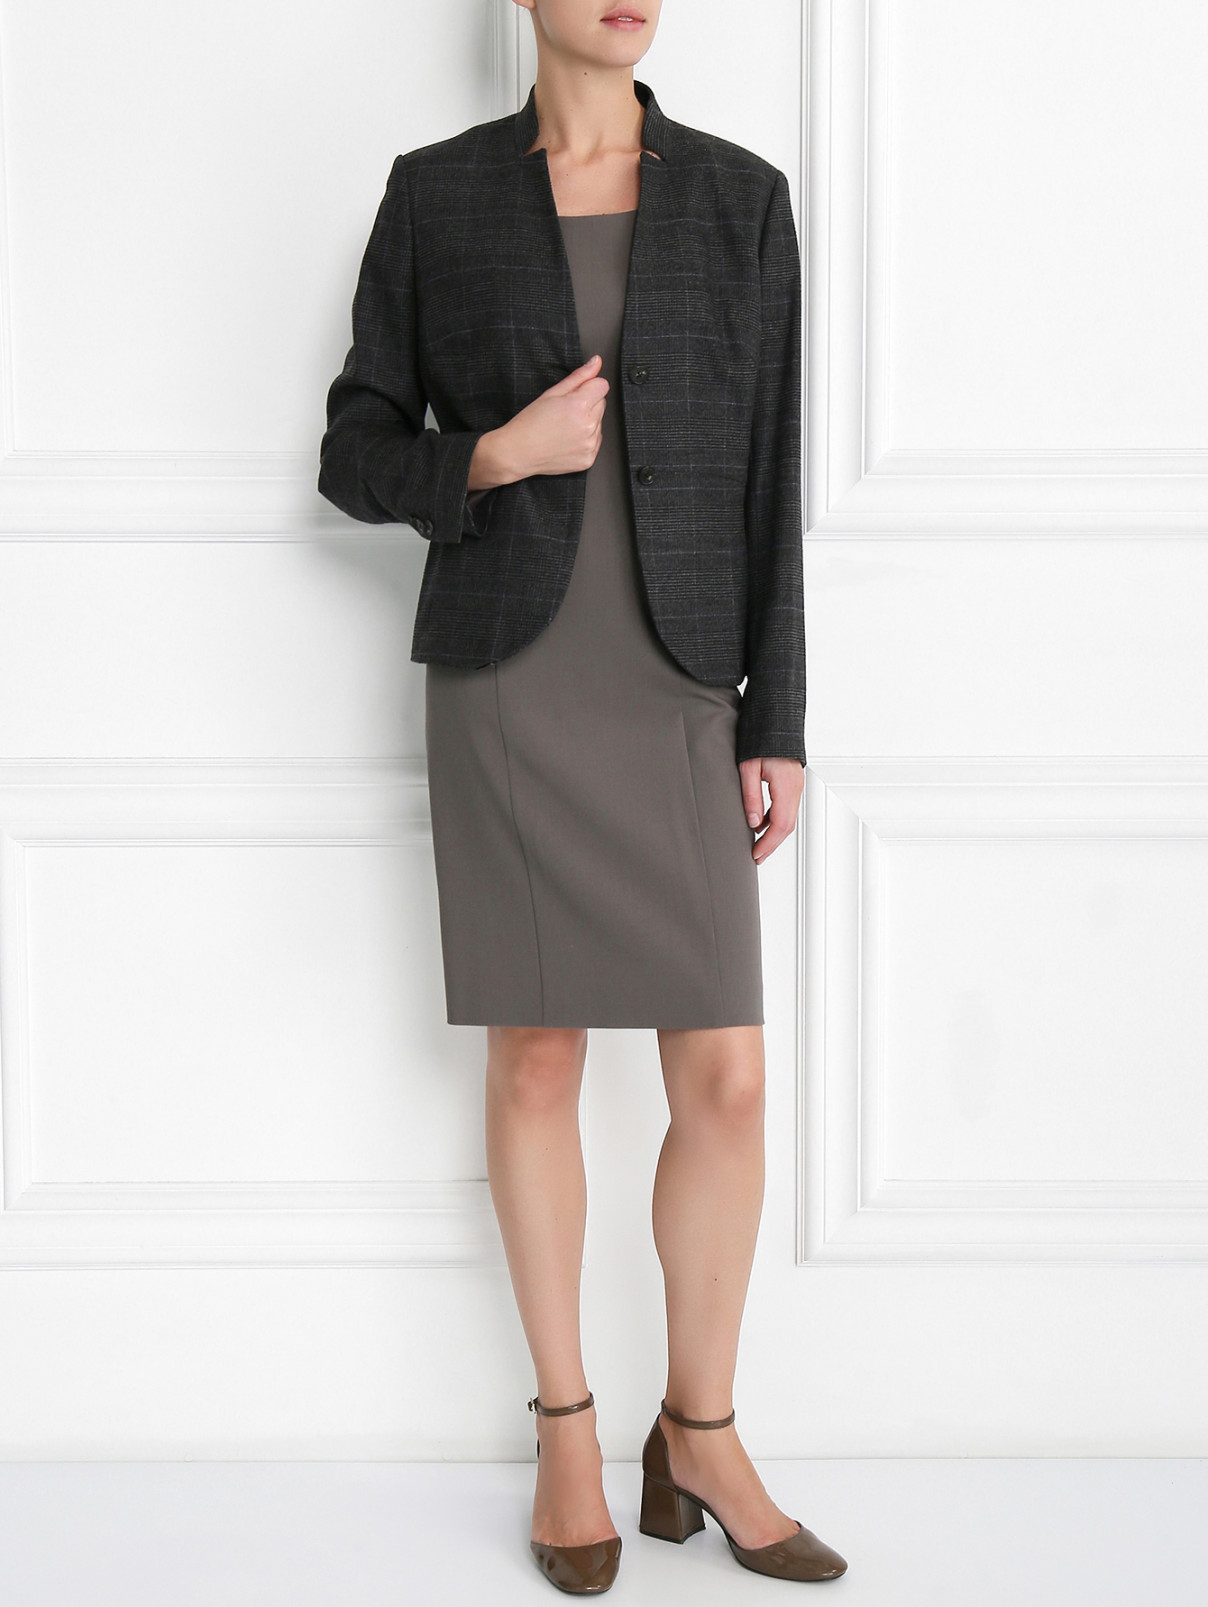 Платье-футляр из шерсти с короткими рукавами Alberta Ferretti  –  Модель Общий вид  – Цвет:  Серый